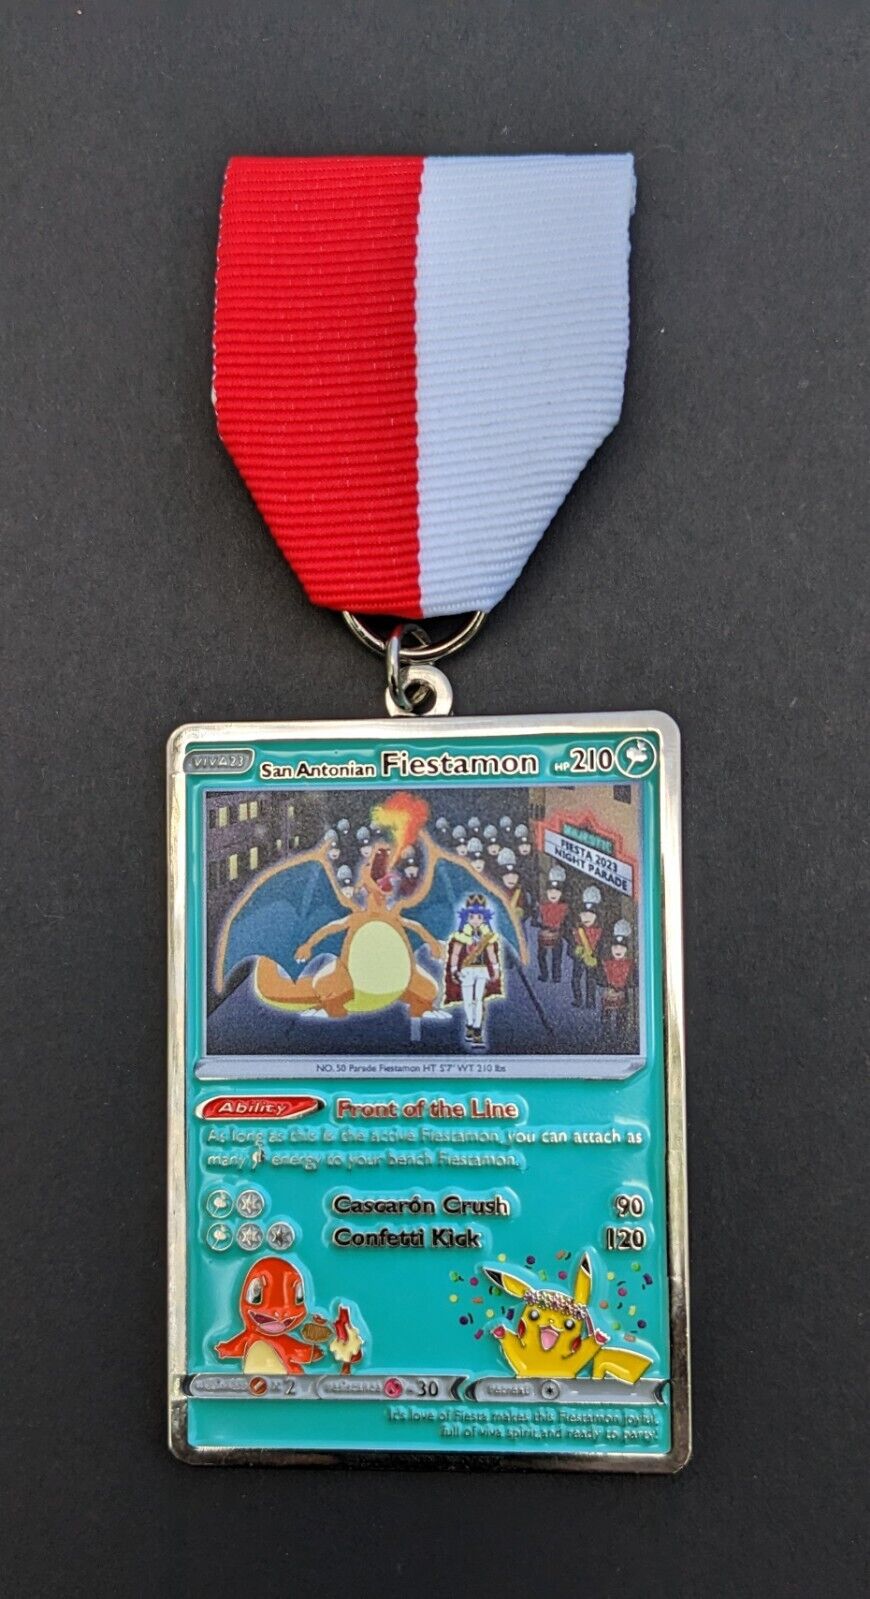 San Antonio Fiesta Medal Special Edition Pokemon Go TCG Charizard Gym Heroes Pin